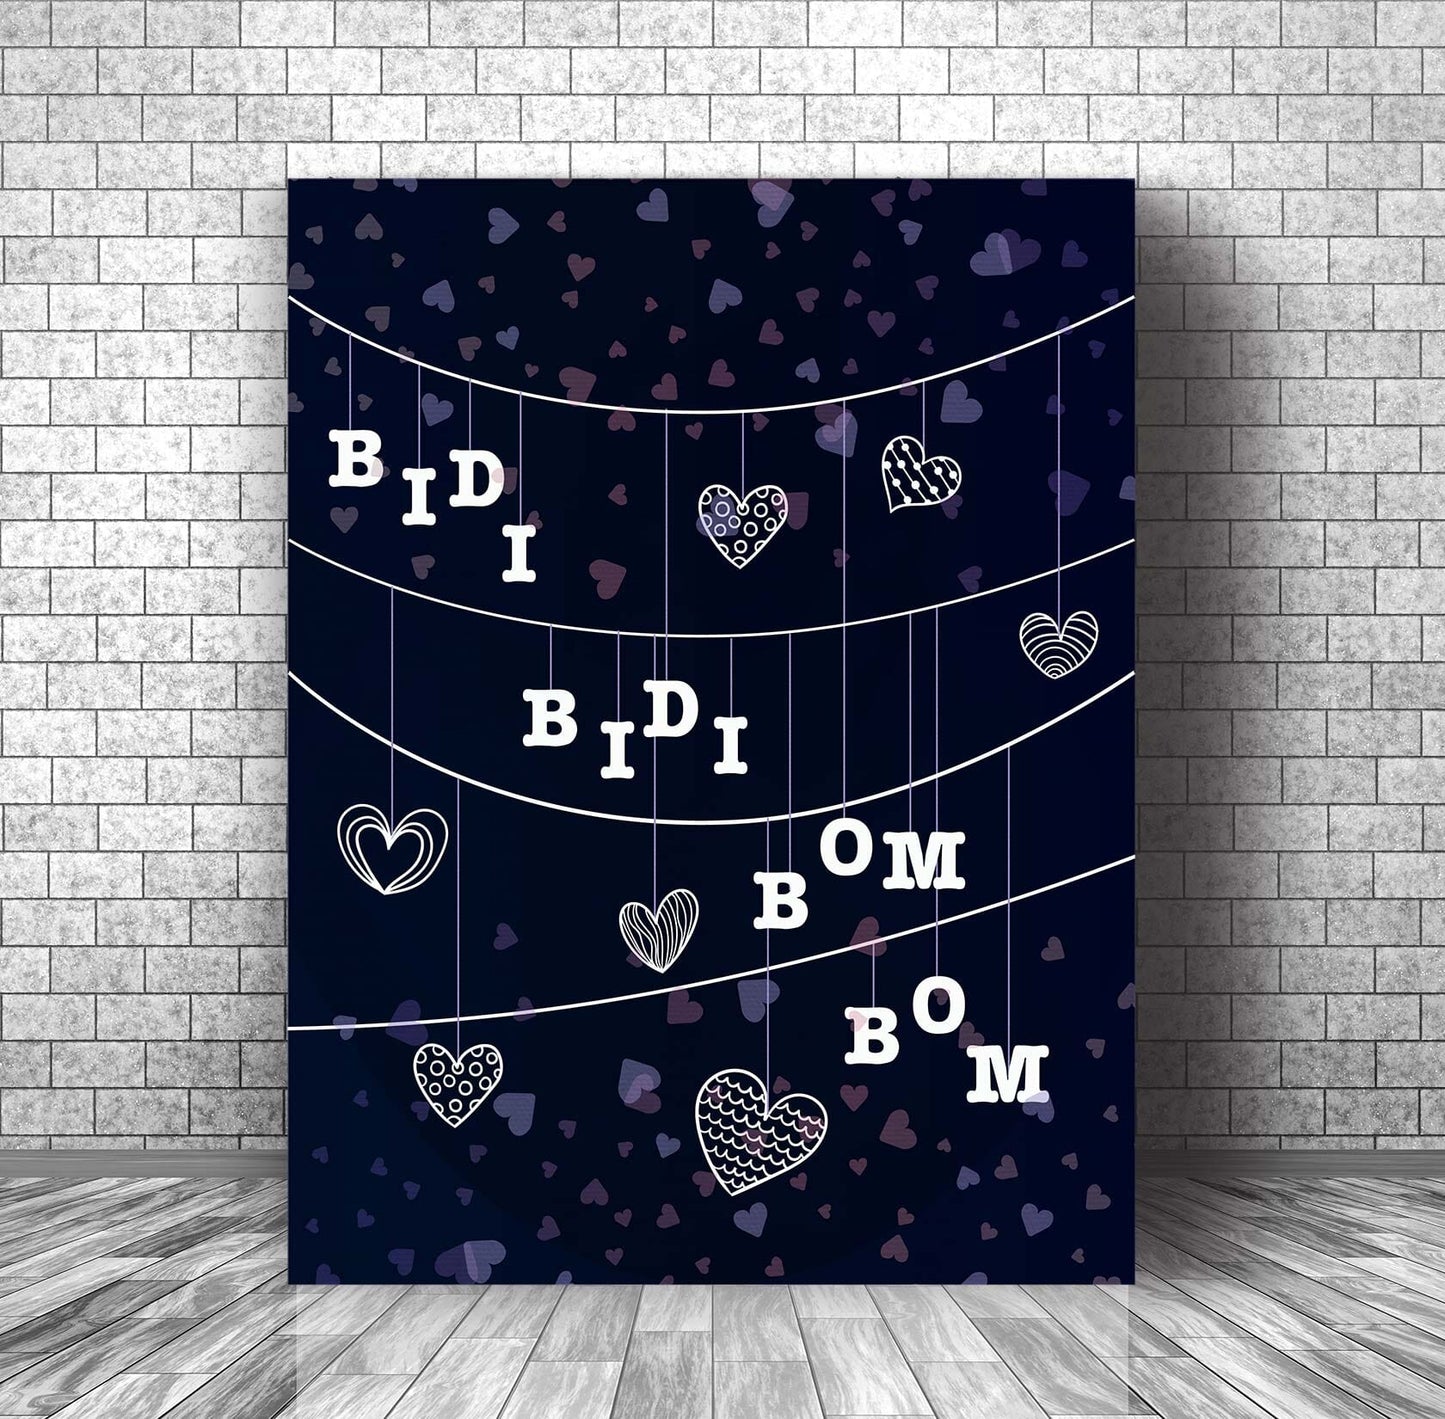 Bidi Bidi Bom Bom by Selena Quintanella - Song Lyric Pop Art Song Lyrics Art Song Lyrics Art 11x14 Canvas Wrap 